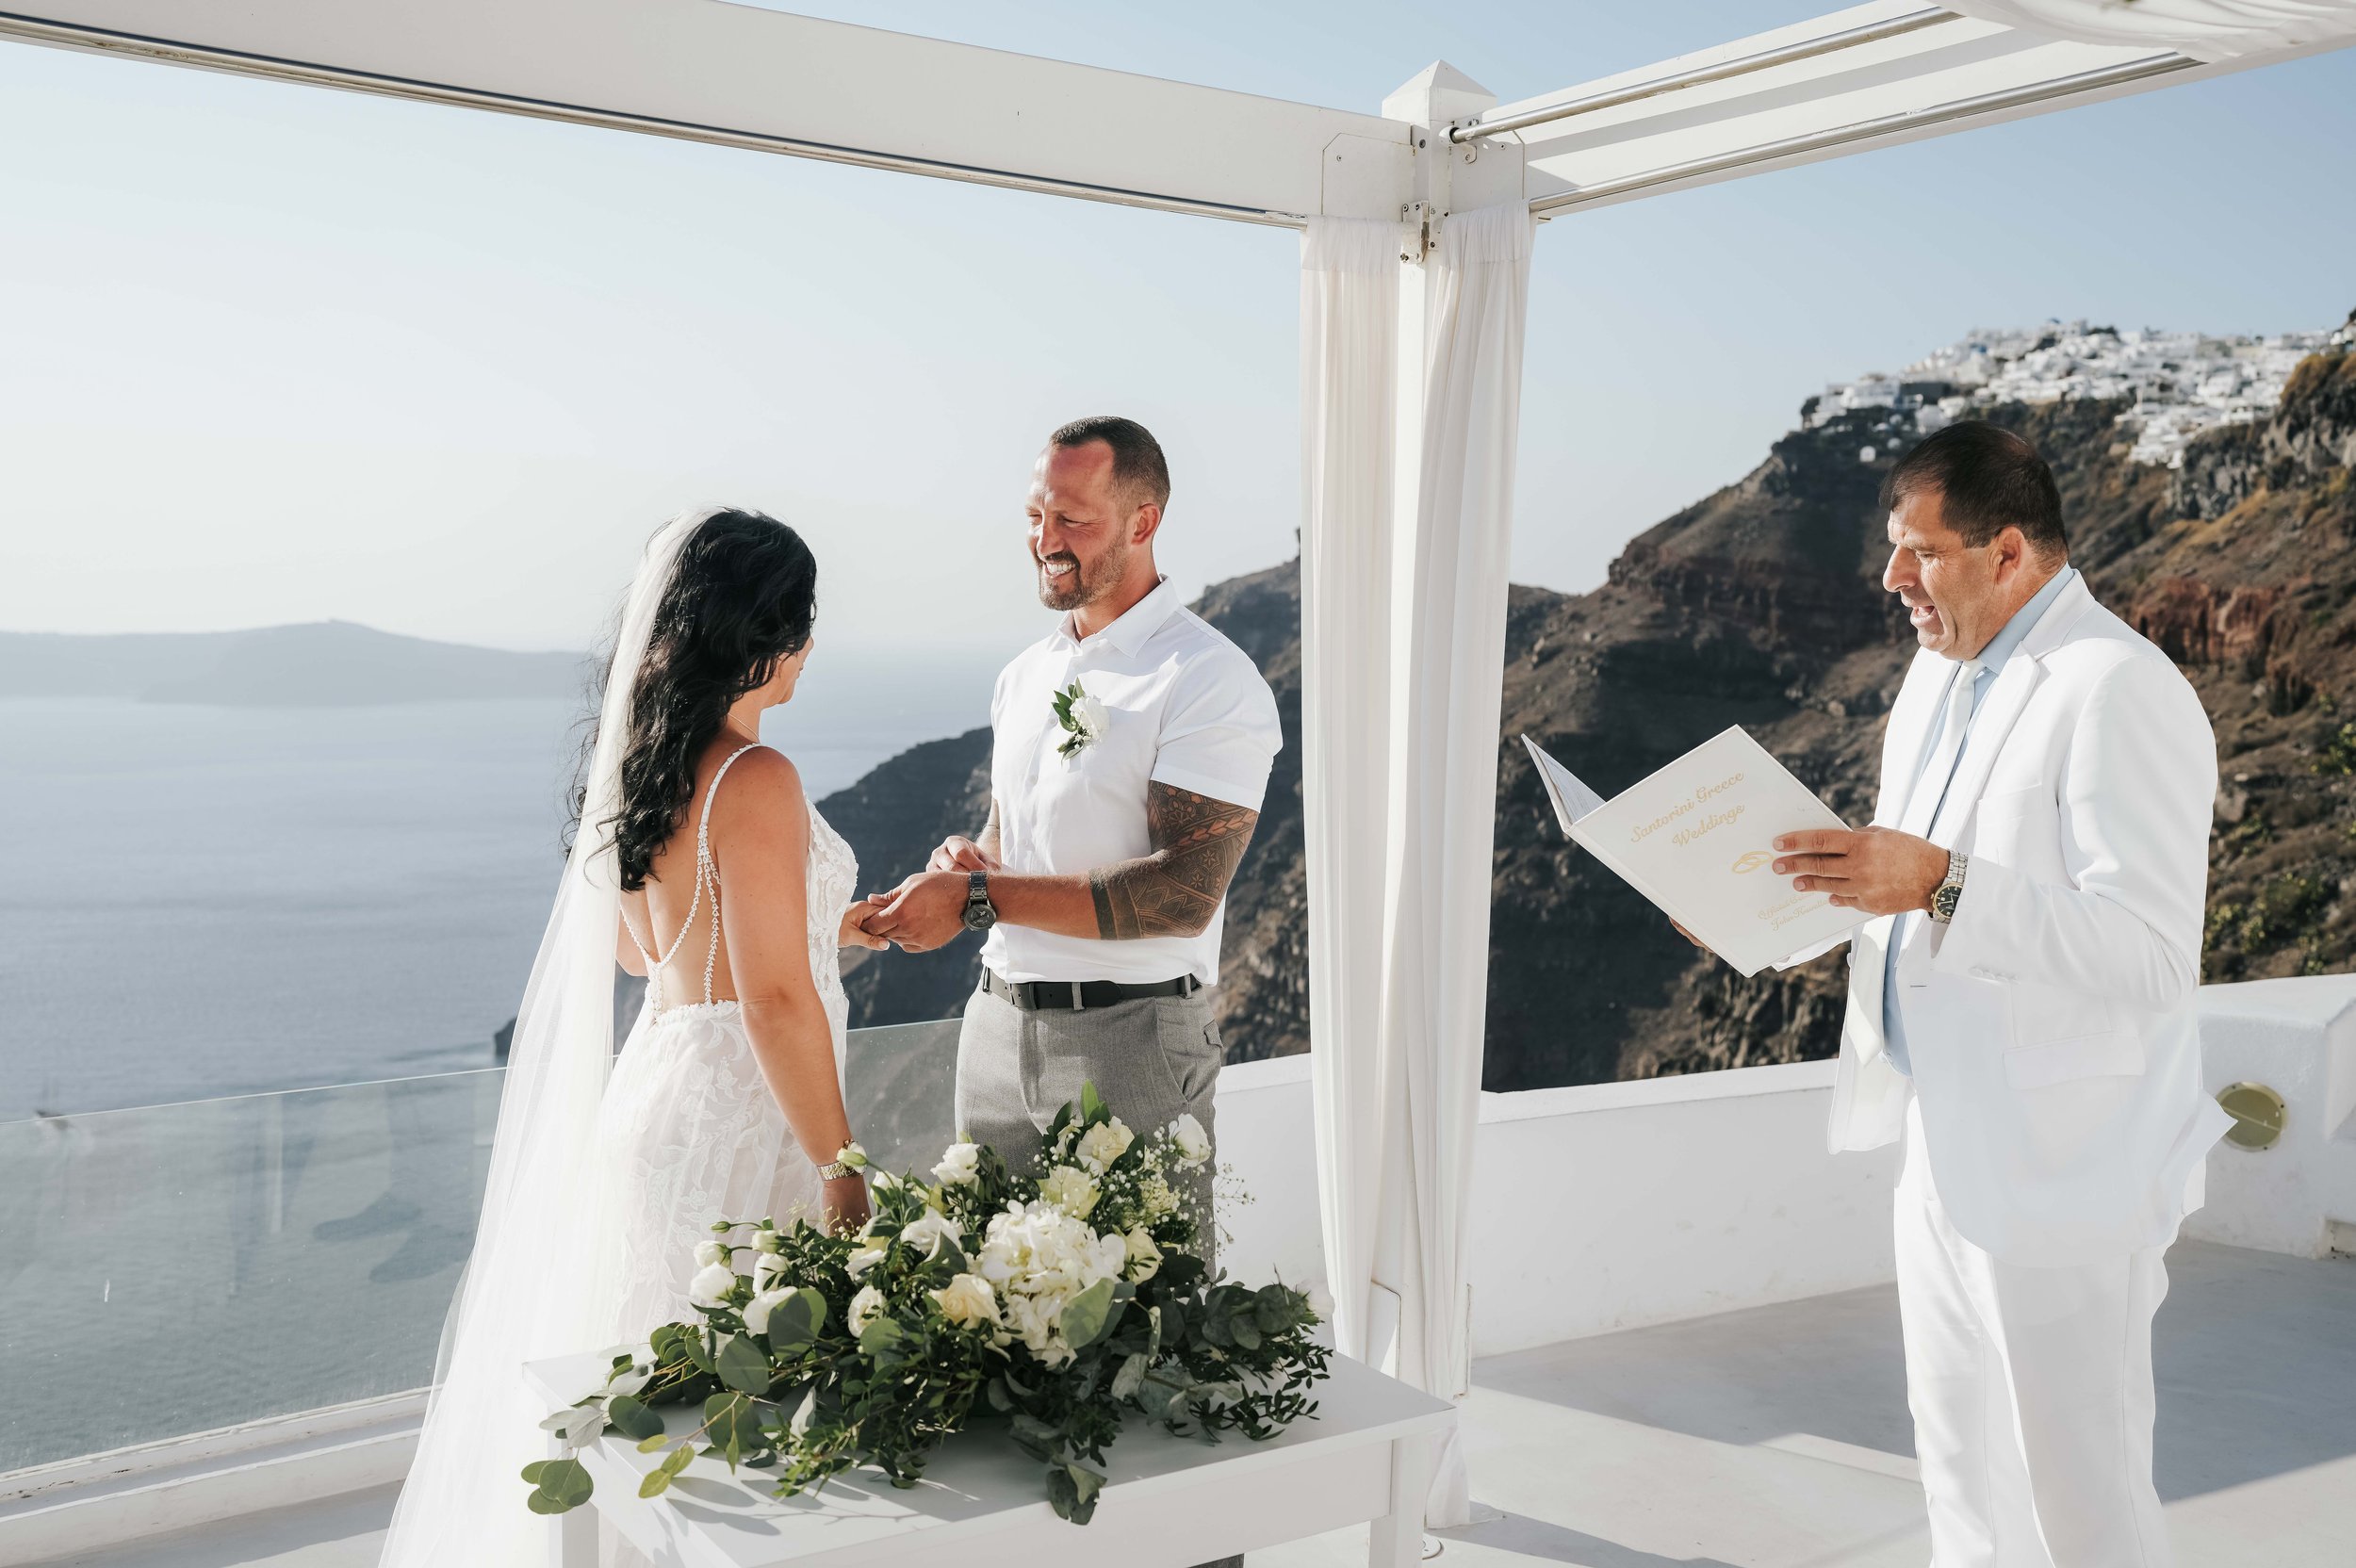 Santorini destination wedding Photography based in the UK - 023.jpg